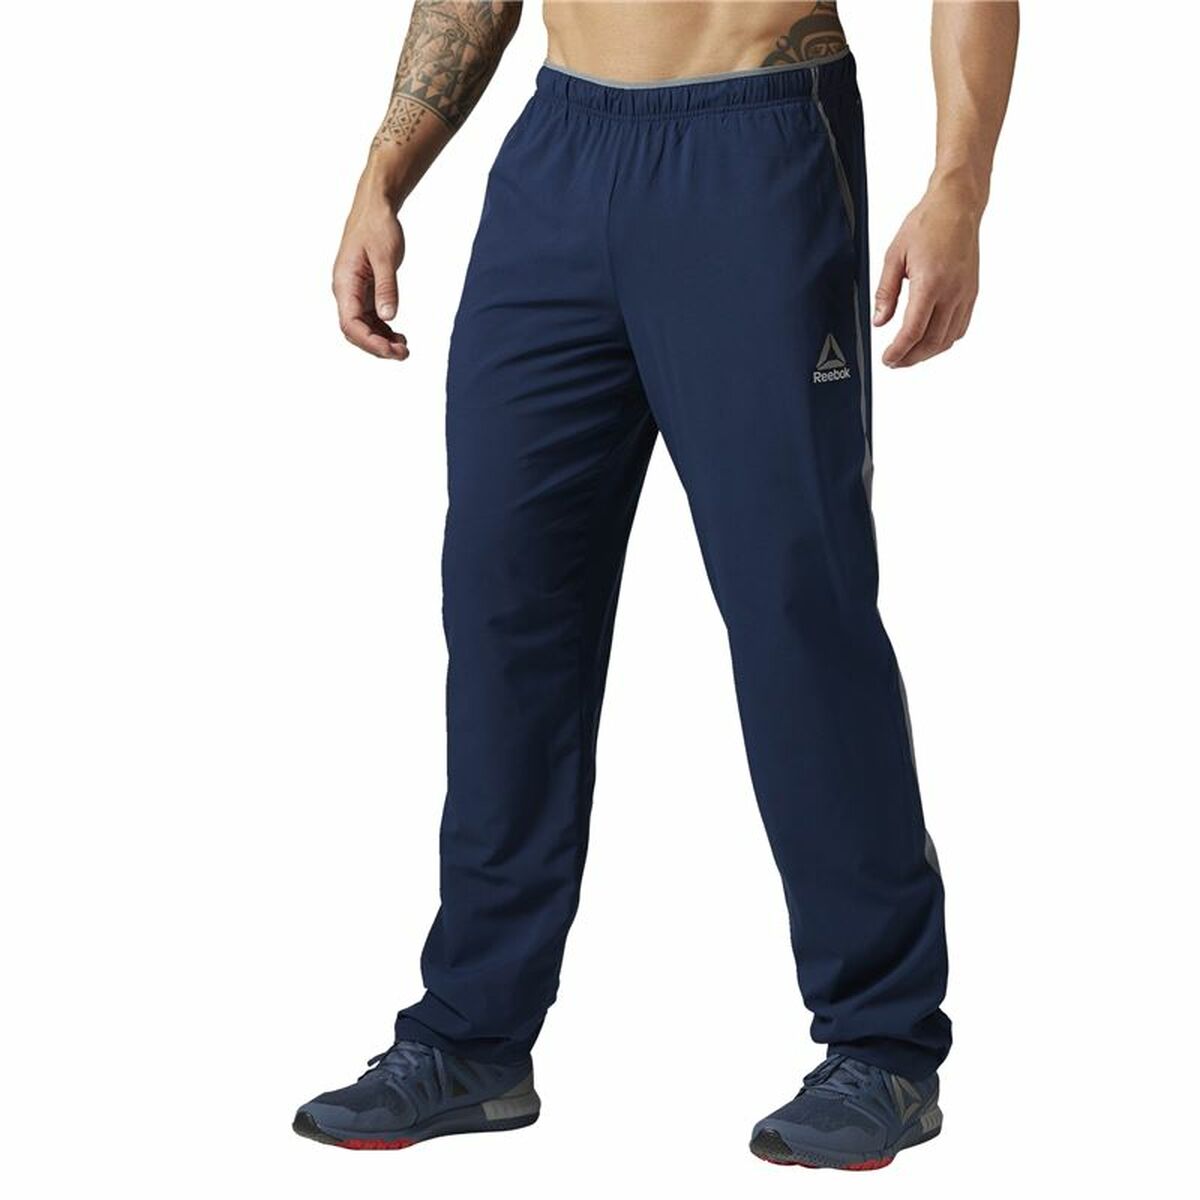 Pantaloni lungi de sport Reebok Workout Ready Albastru închis Bărbați - Mărime S